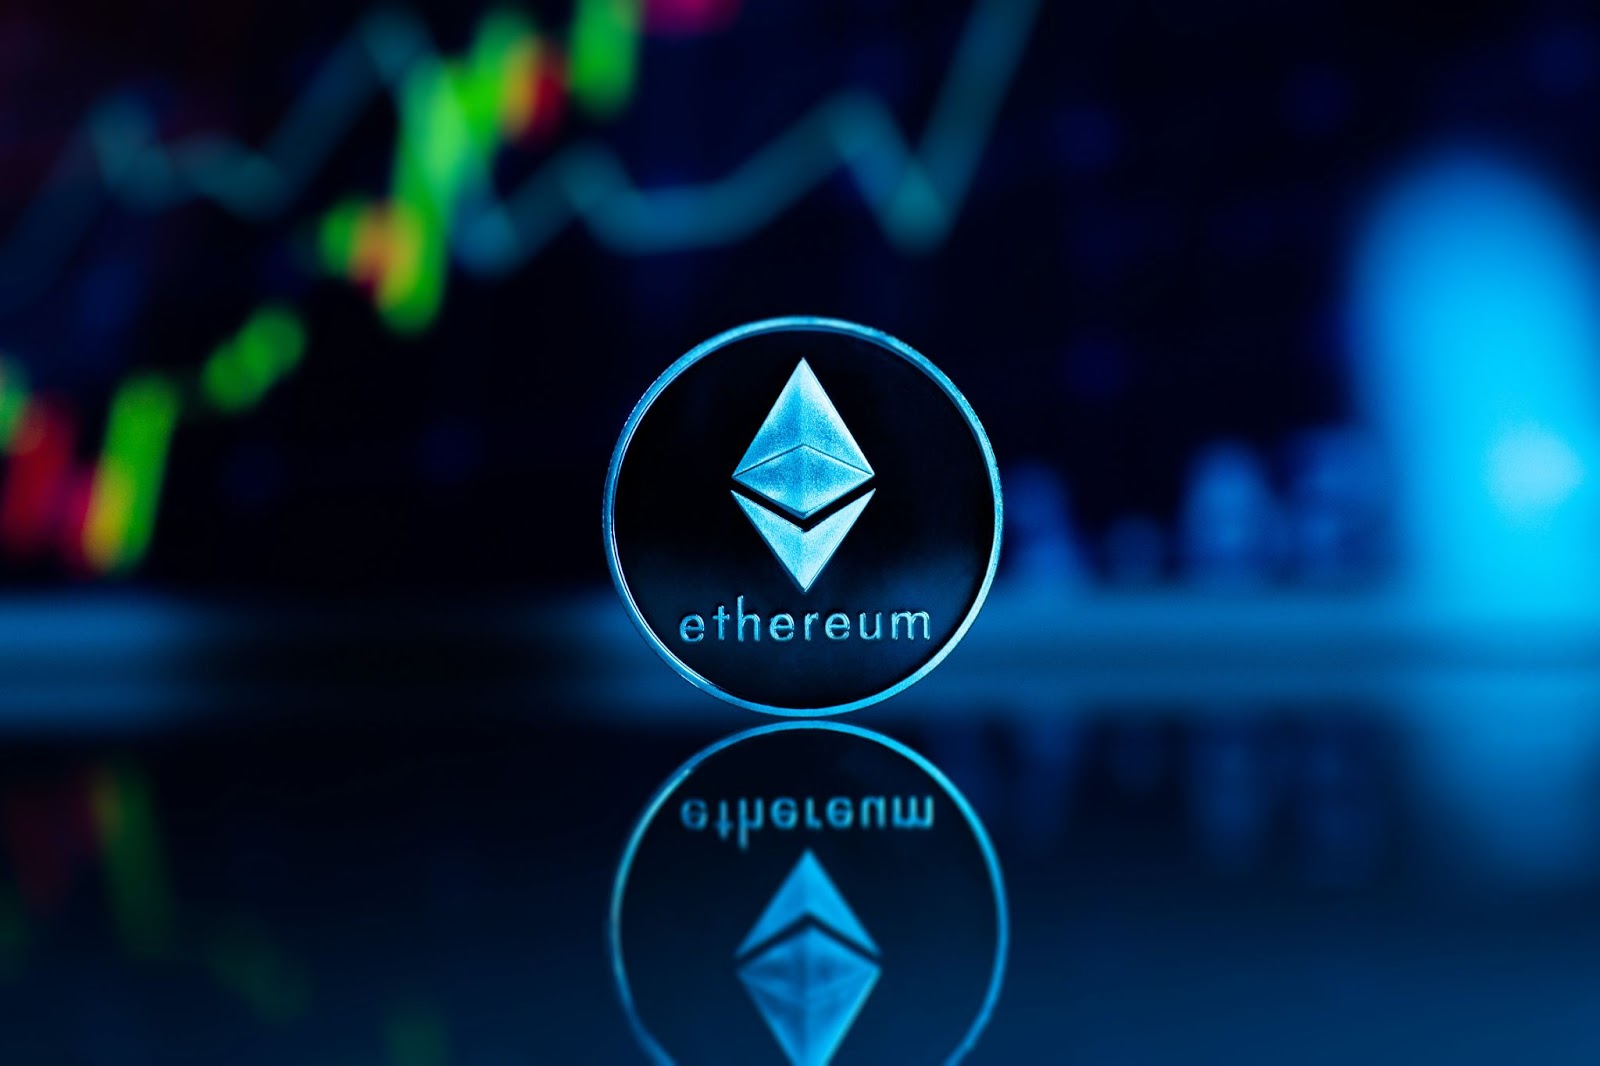 The Ethereum logo on a blue light